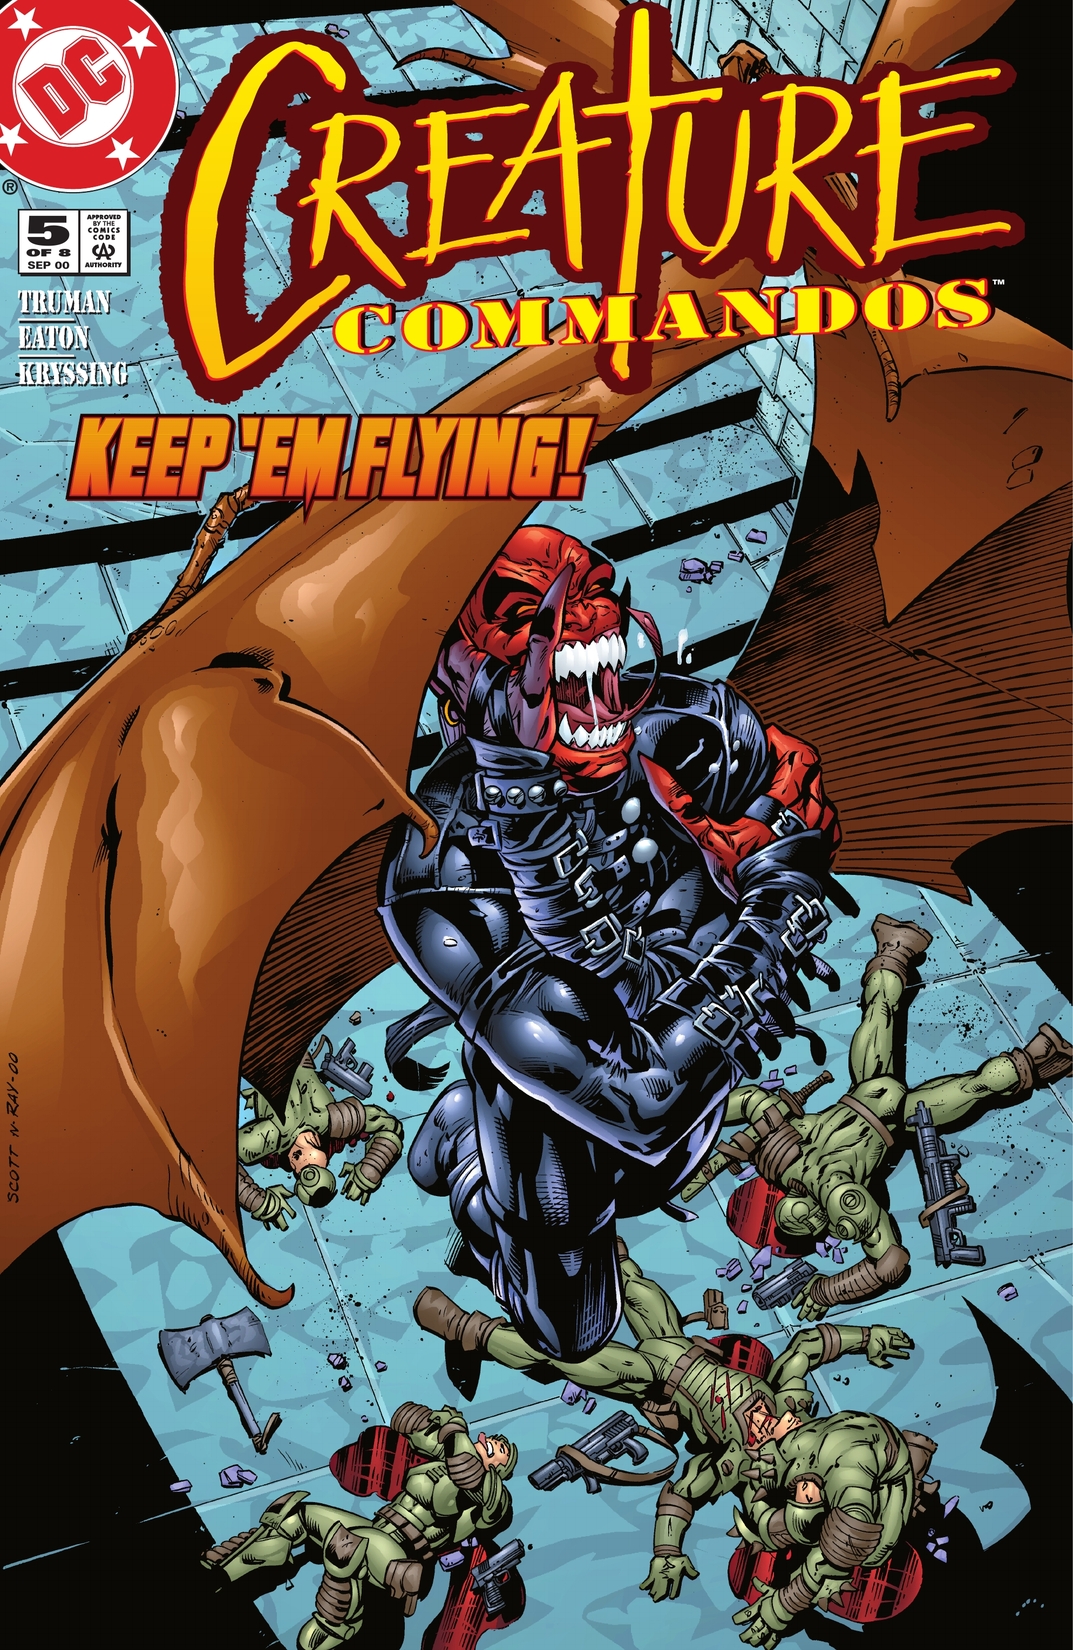 Creature Commandos #5 preview images